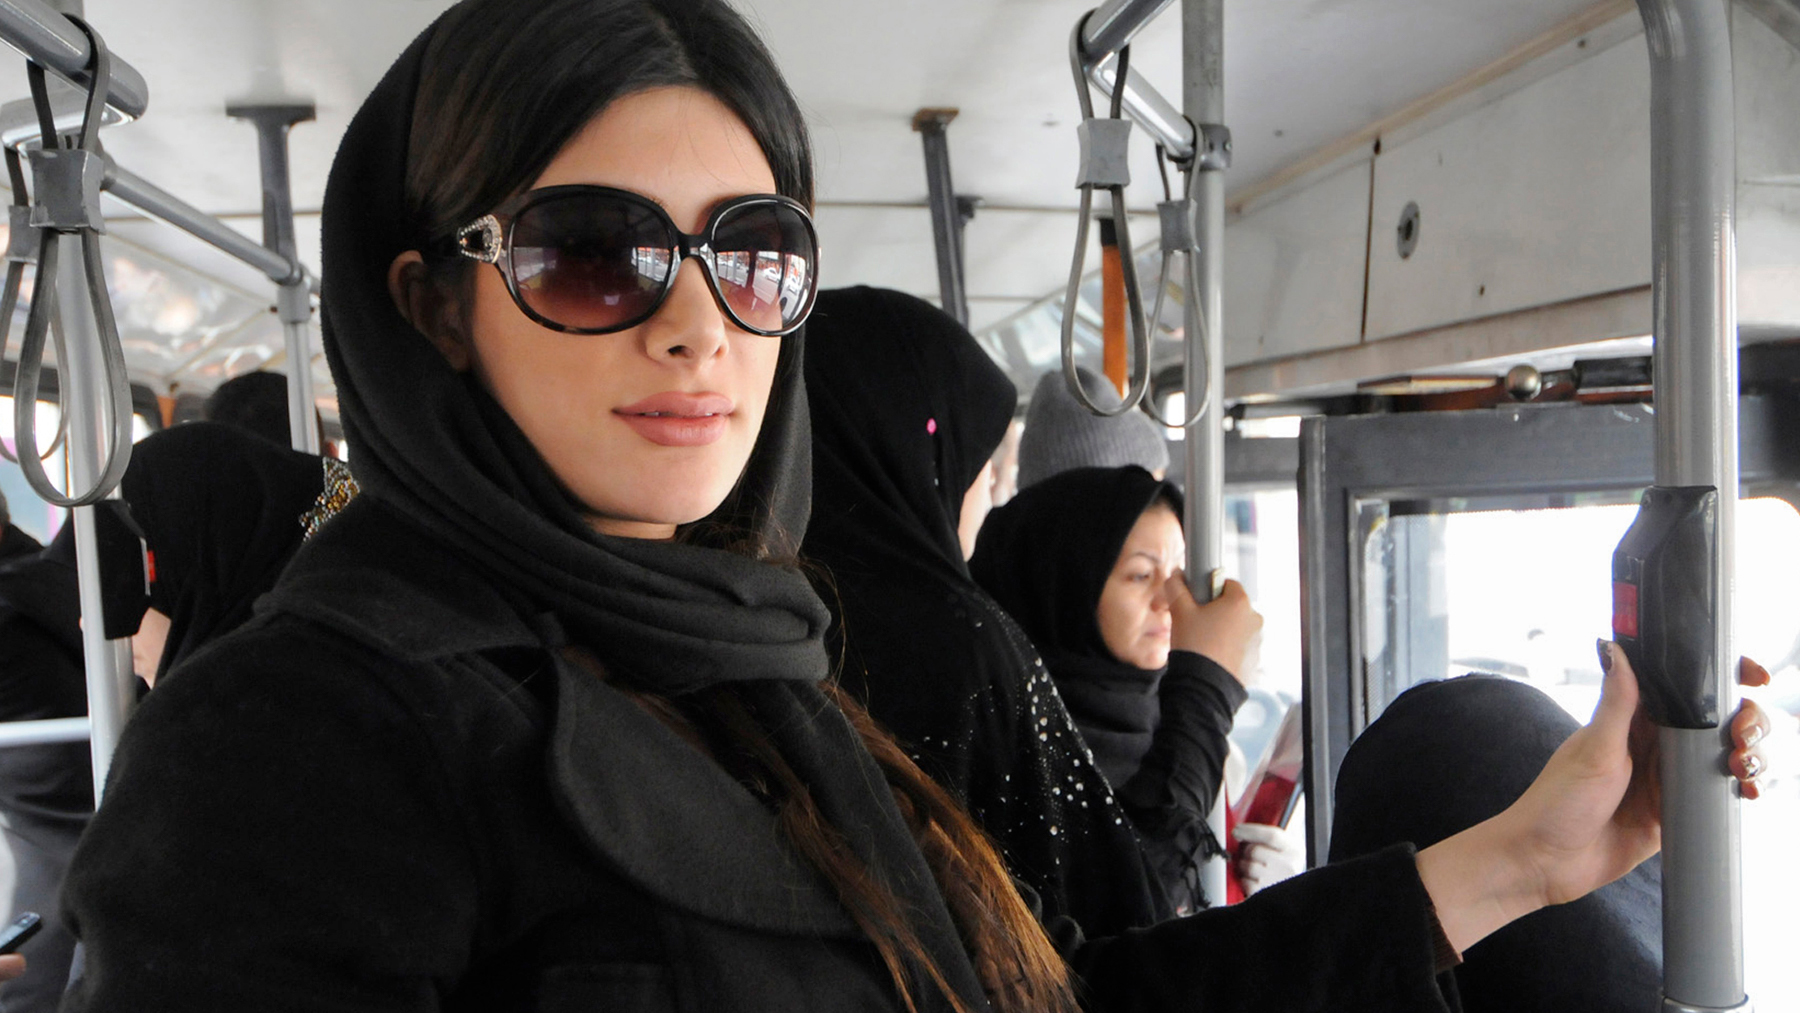 Pretty iranian women